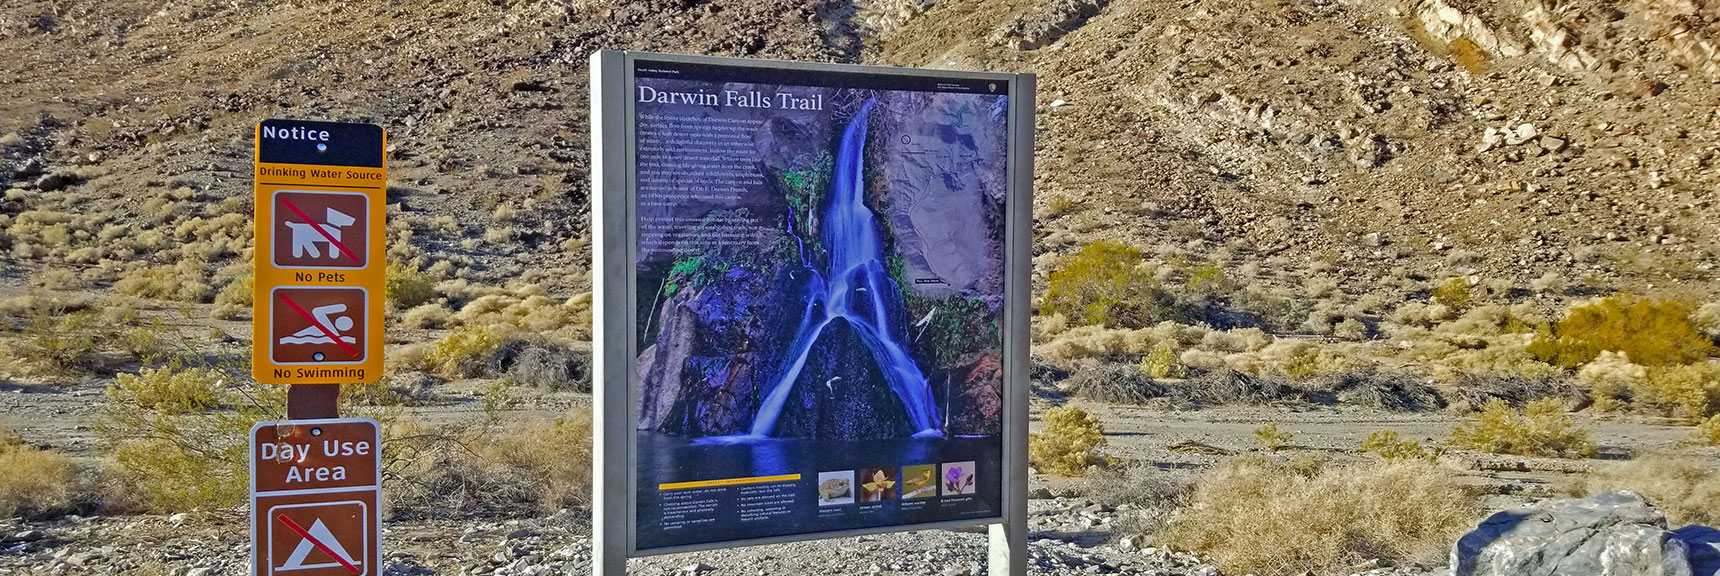 Interpretive Sign at Darwin Falls Trailhead | Darwin Falls, Death Valley National Park, California